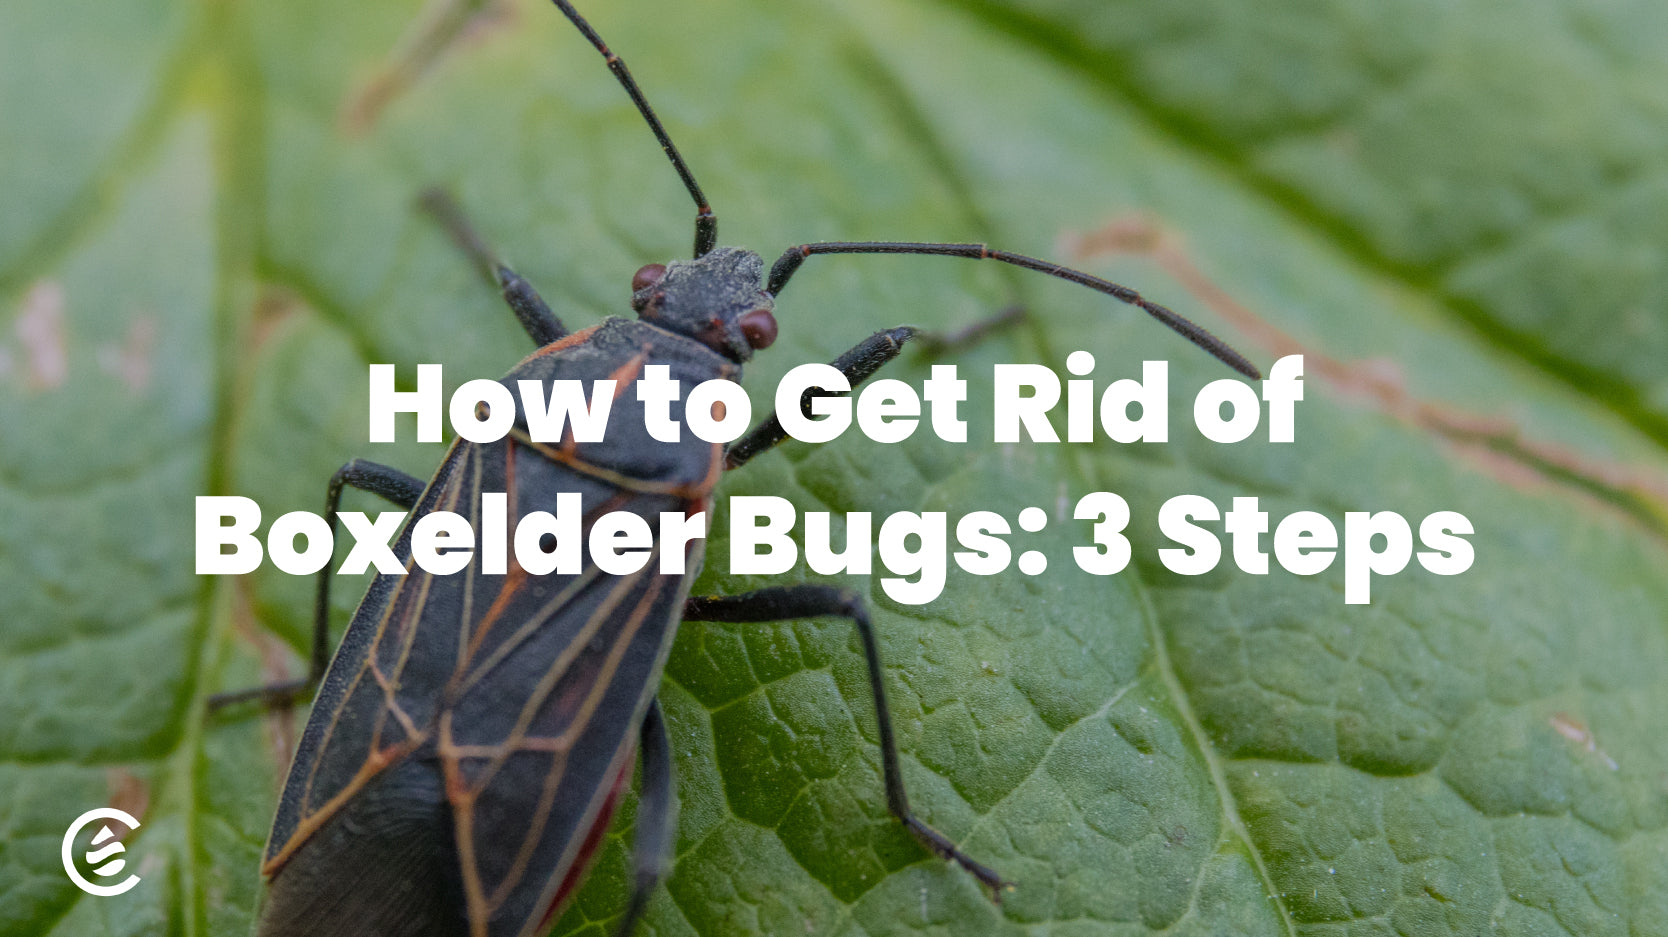 Cedarcide Blog Post Image, Hot to Get Rid of Boxelder Bugs: 3 Steps